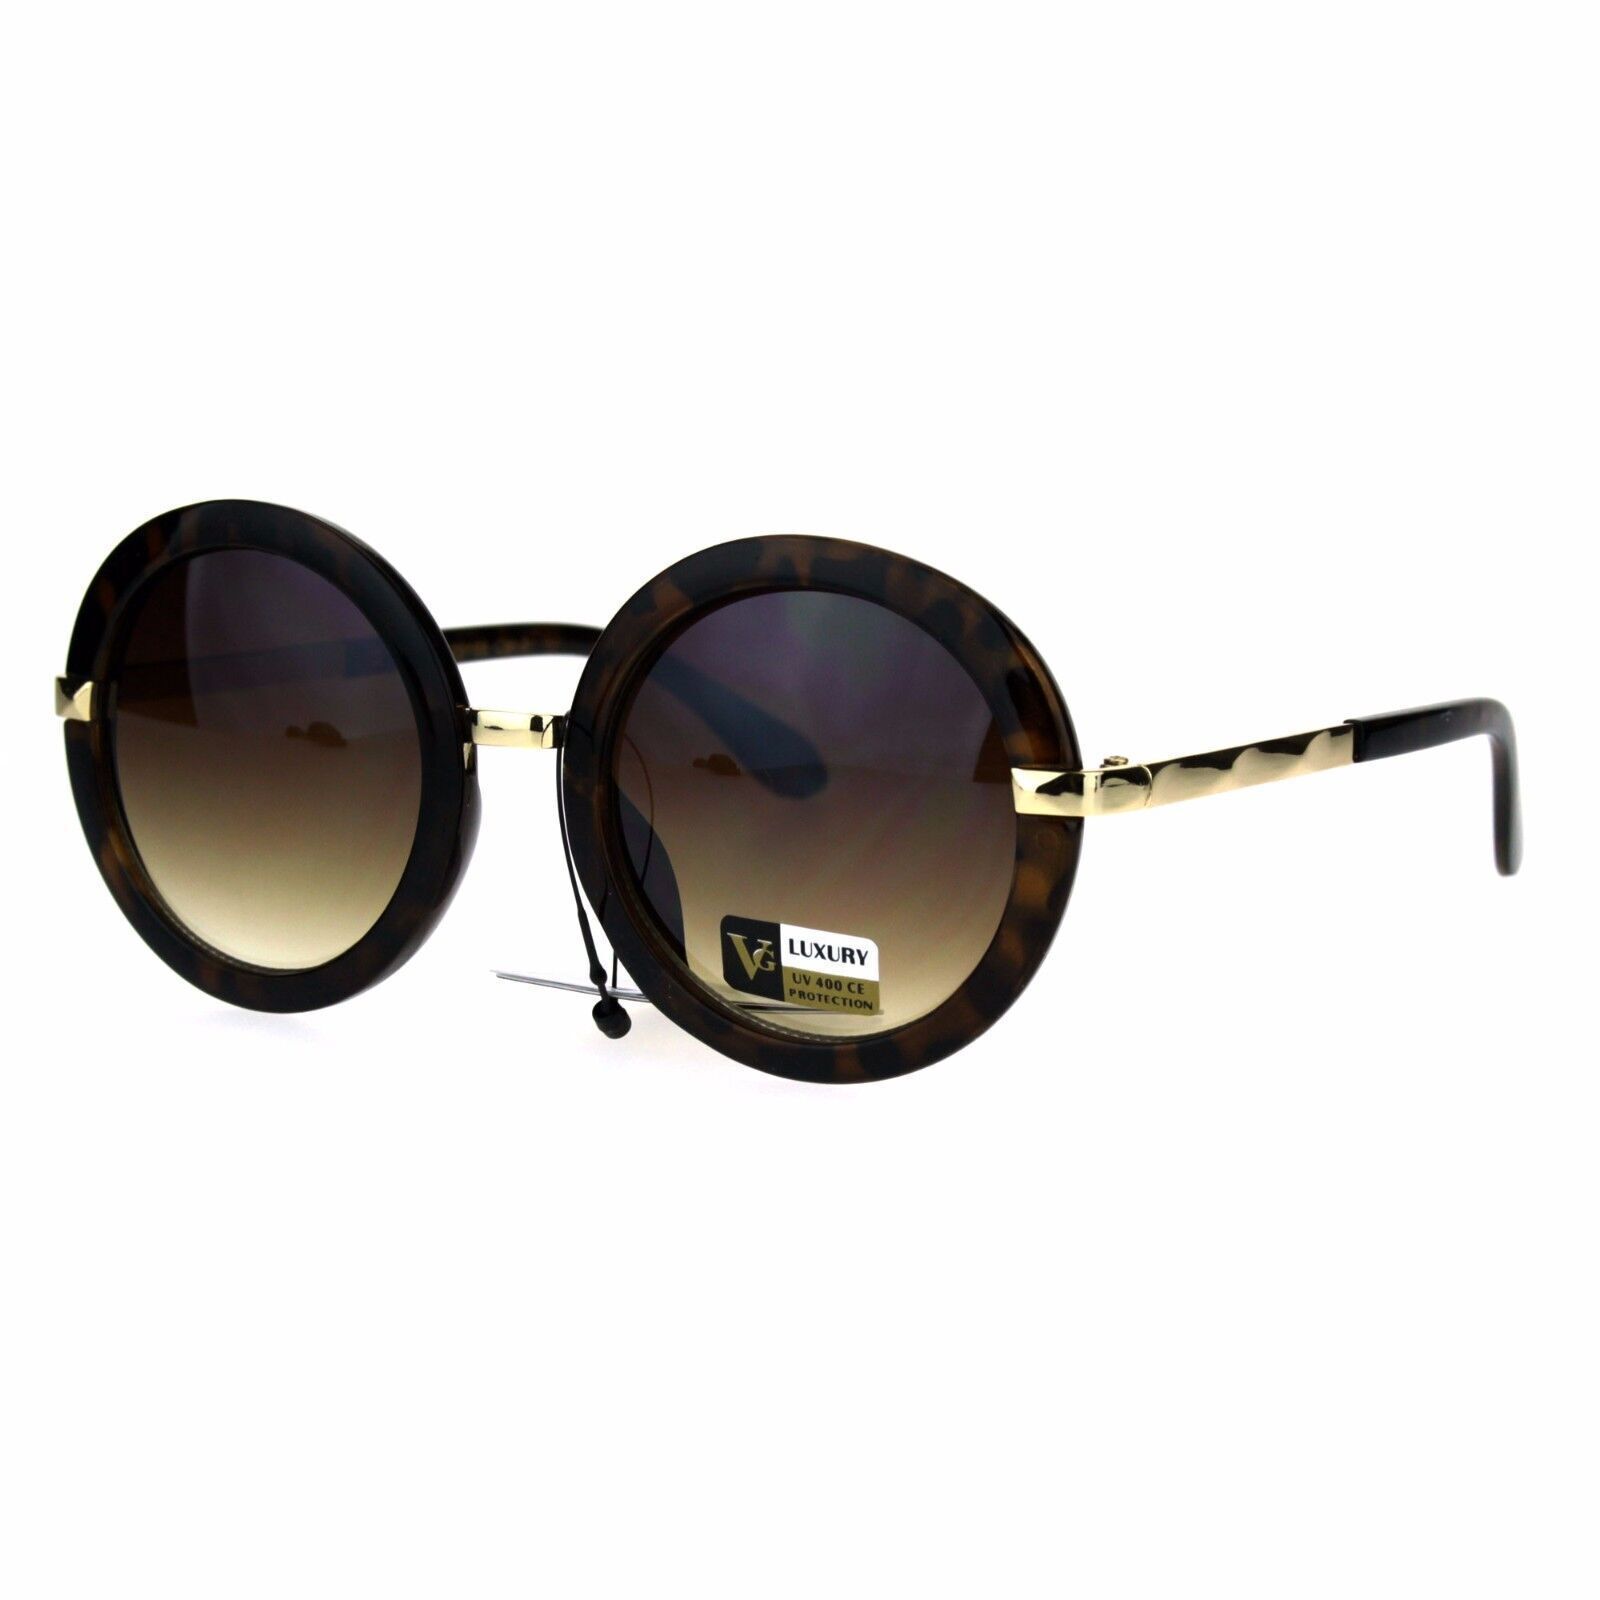 Primary image for VG Designer Fashion Sunglasses Women's Vintage Round Frame UV400